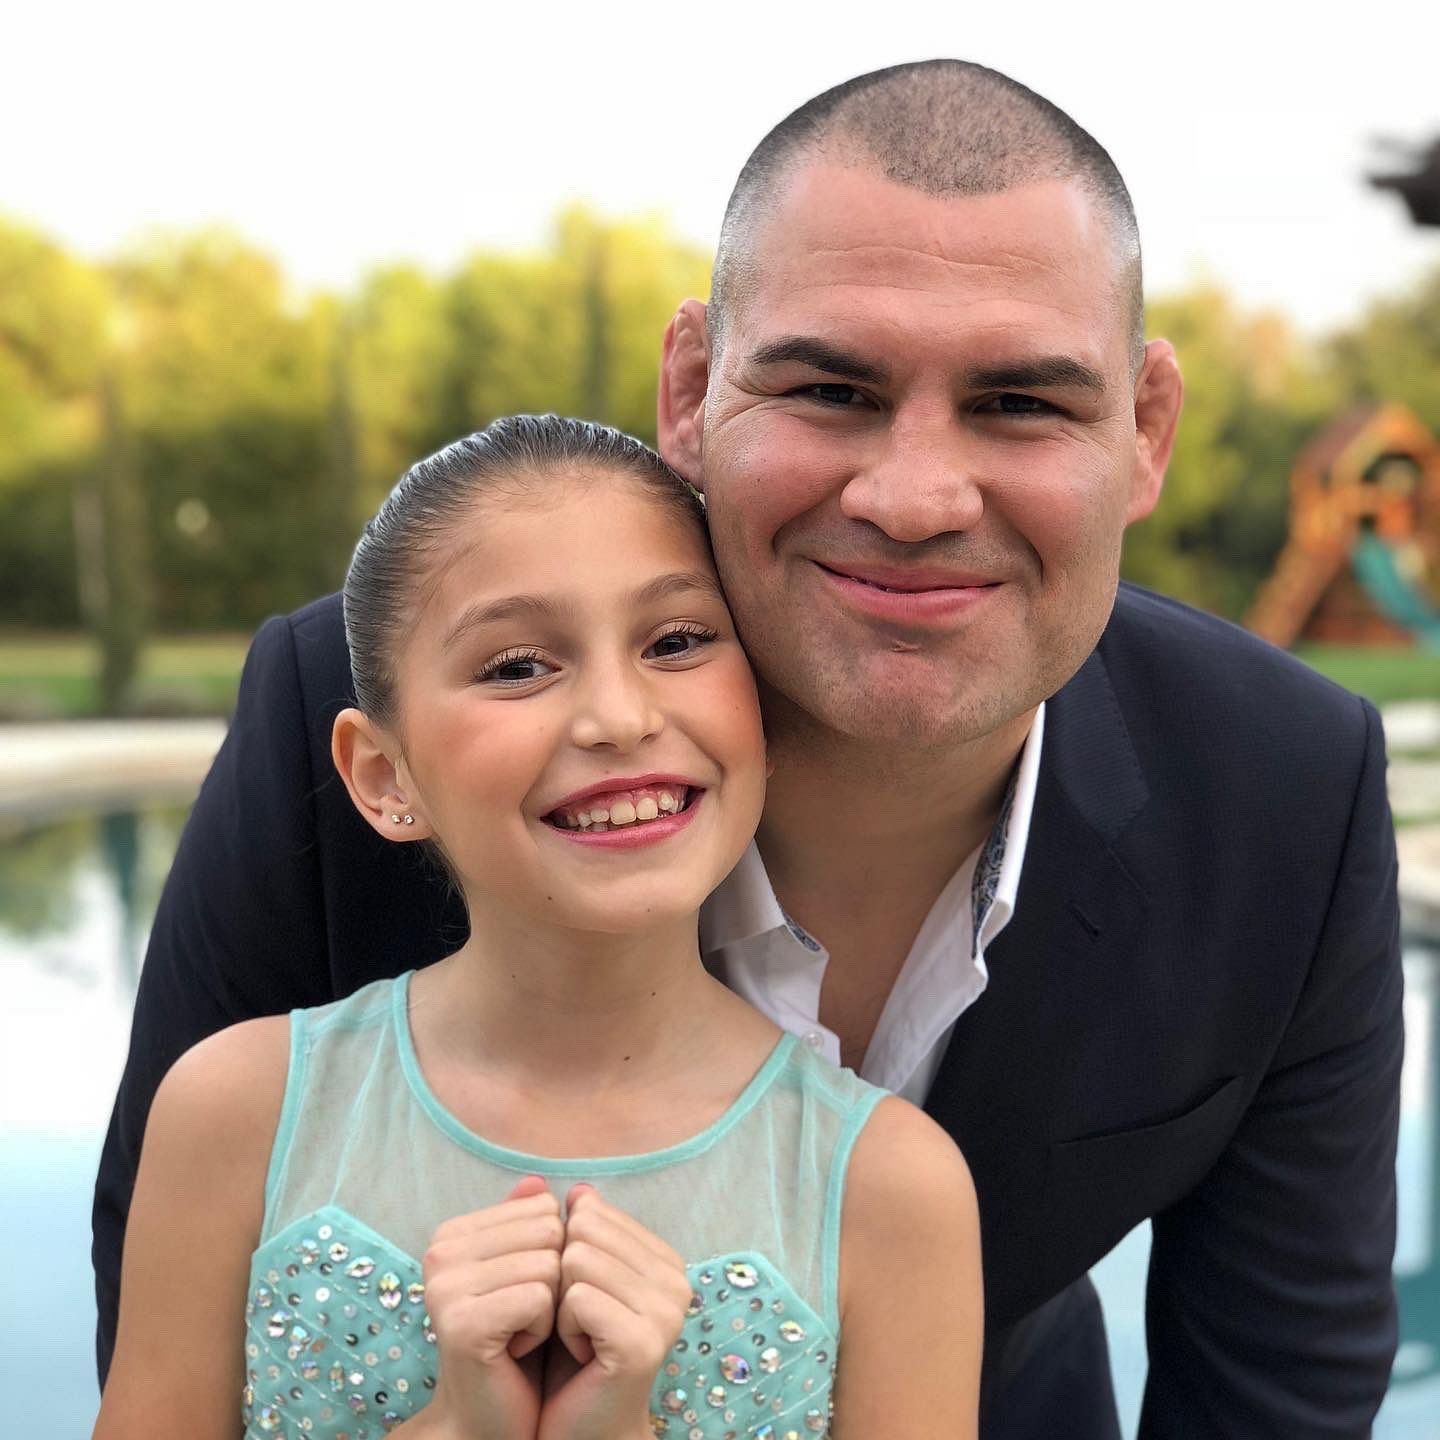 Cain Velasquez and his daughter Coco [via Twitter]